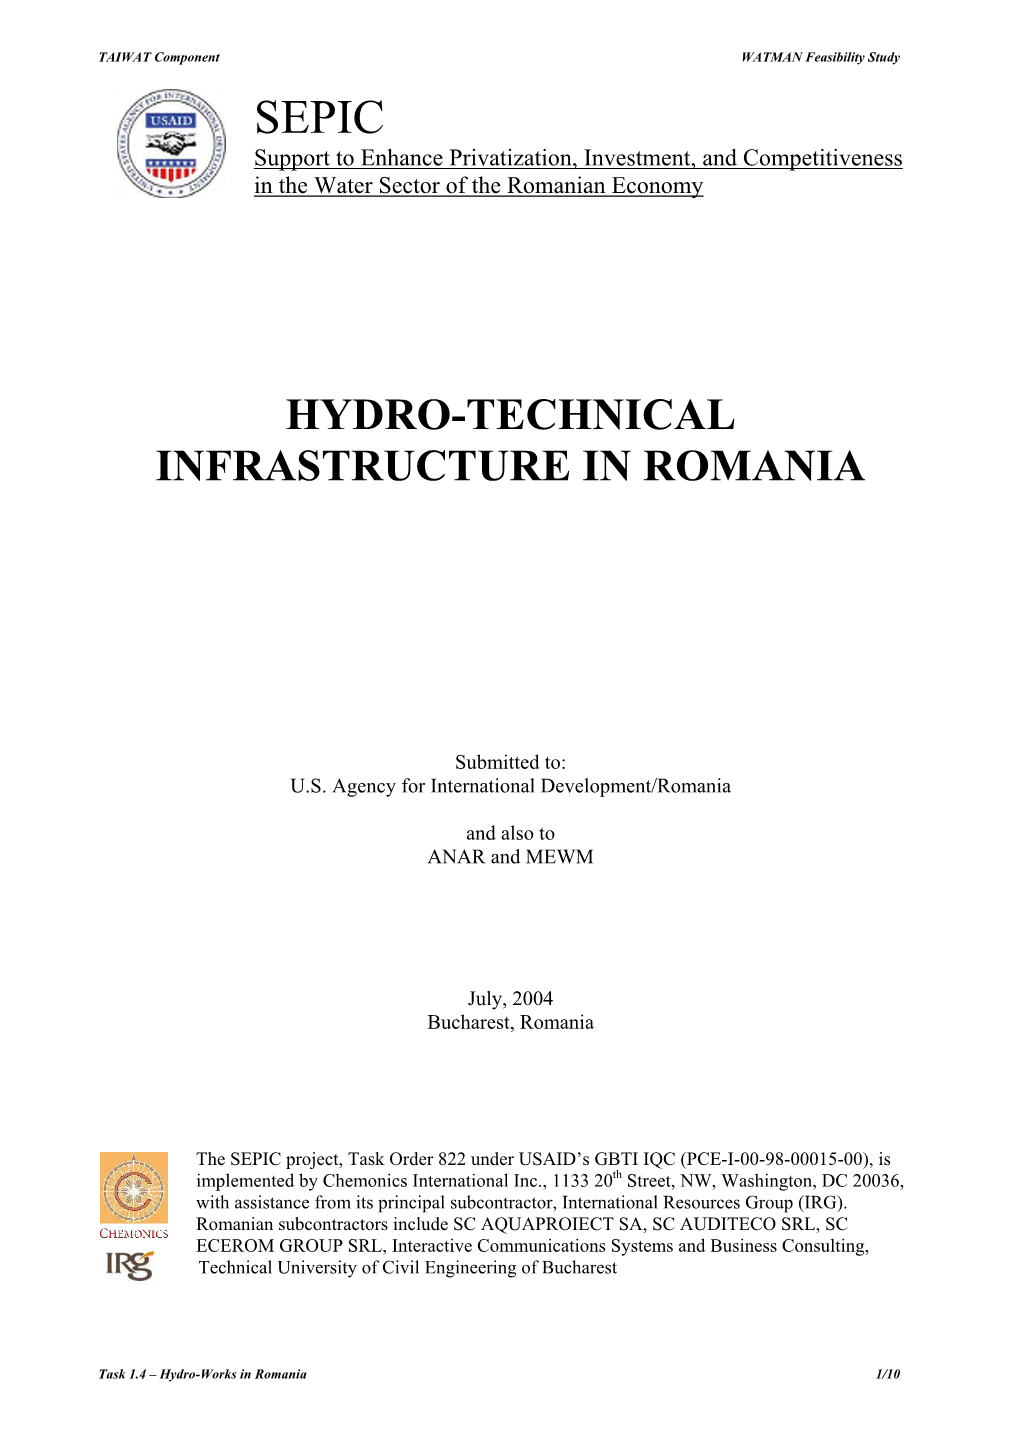 Hydro-Technical Infrastructure in Romania